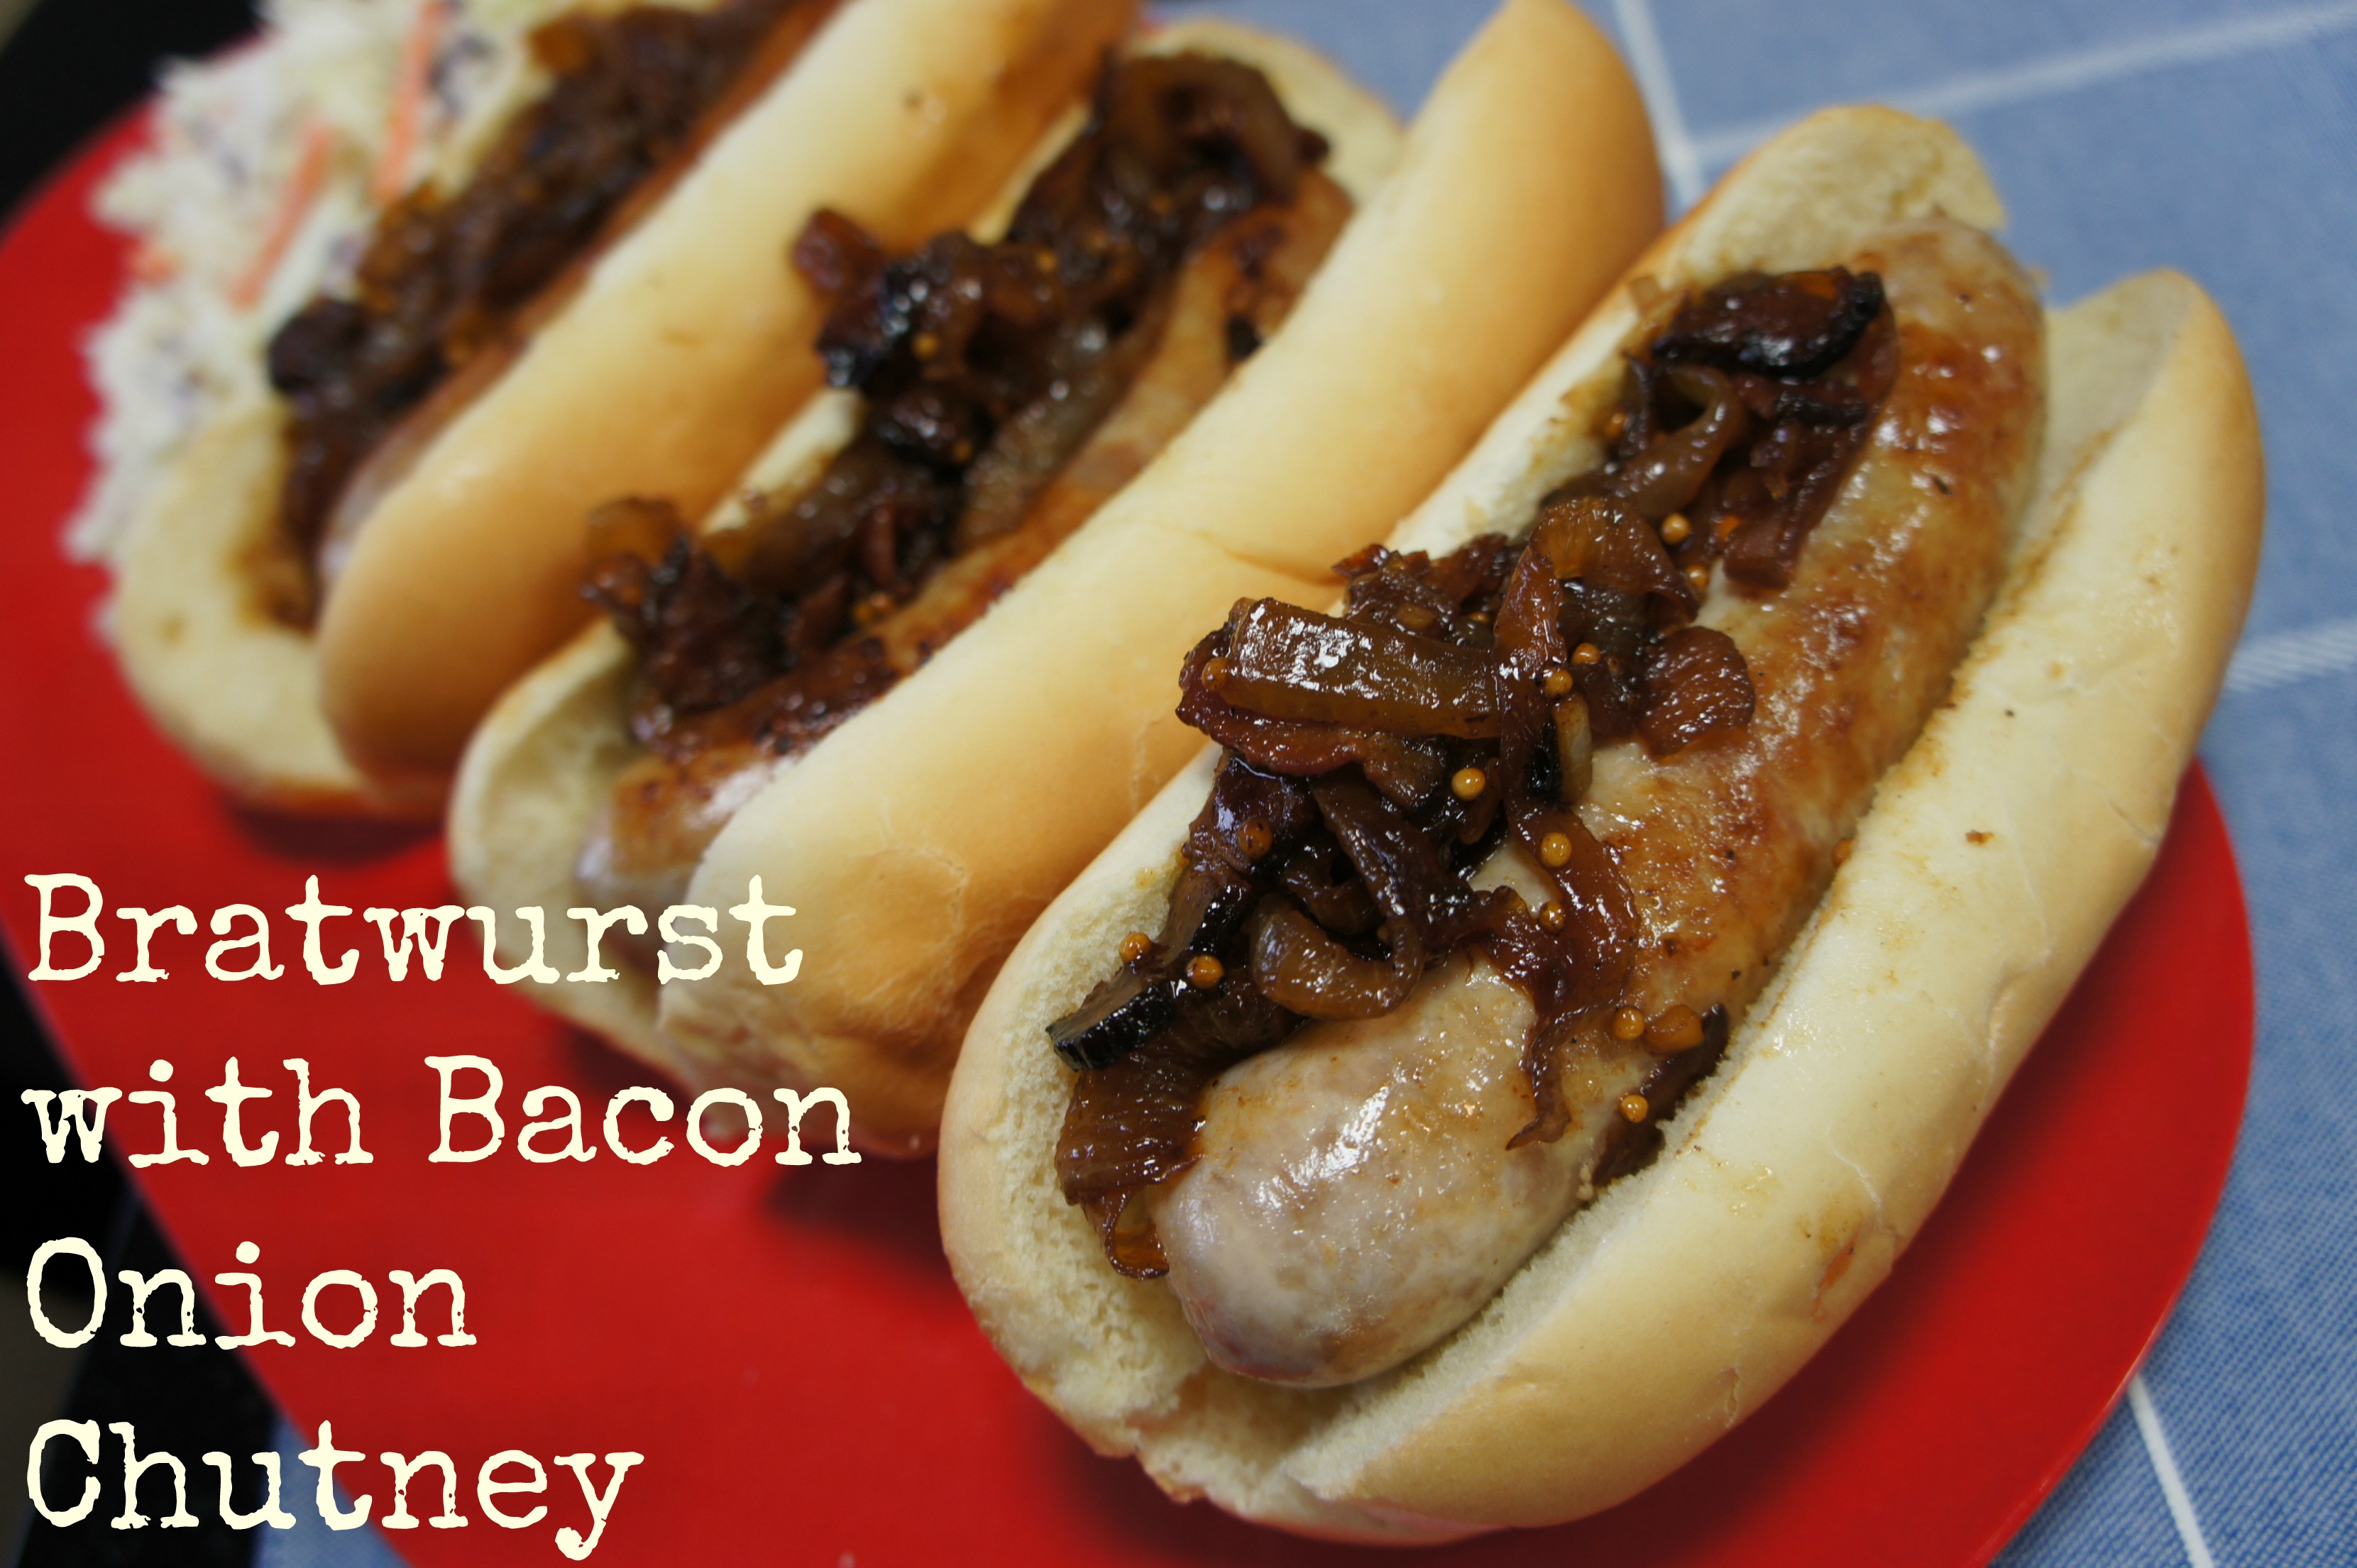 Bratwurst with Bacon Onion Chutney